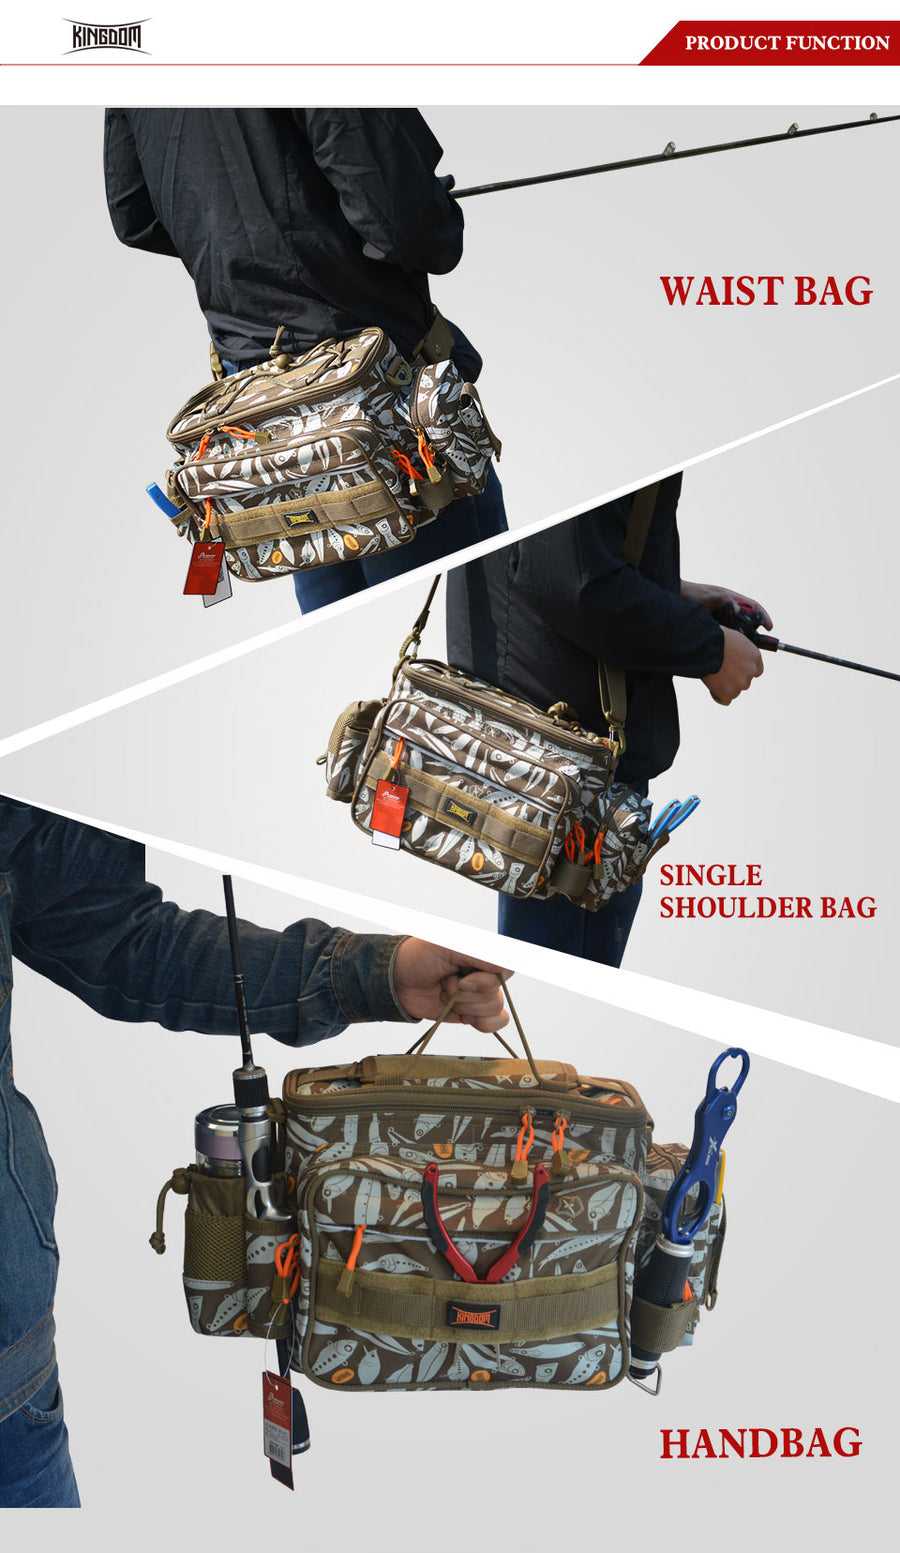 Kingdom fishing Waterproof Fishing Bag Multifunctional Outdoor Adjustable Sided Waist Shoulder Carry Strap Waist Pack lyb-13